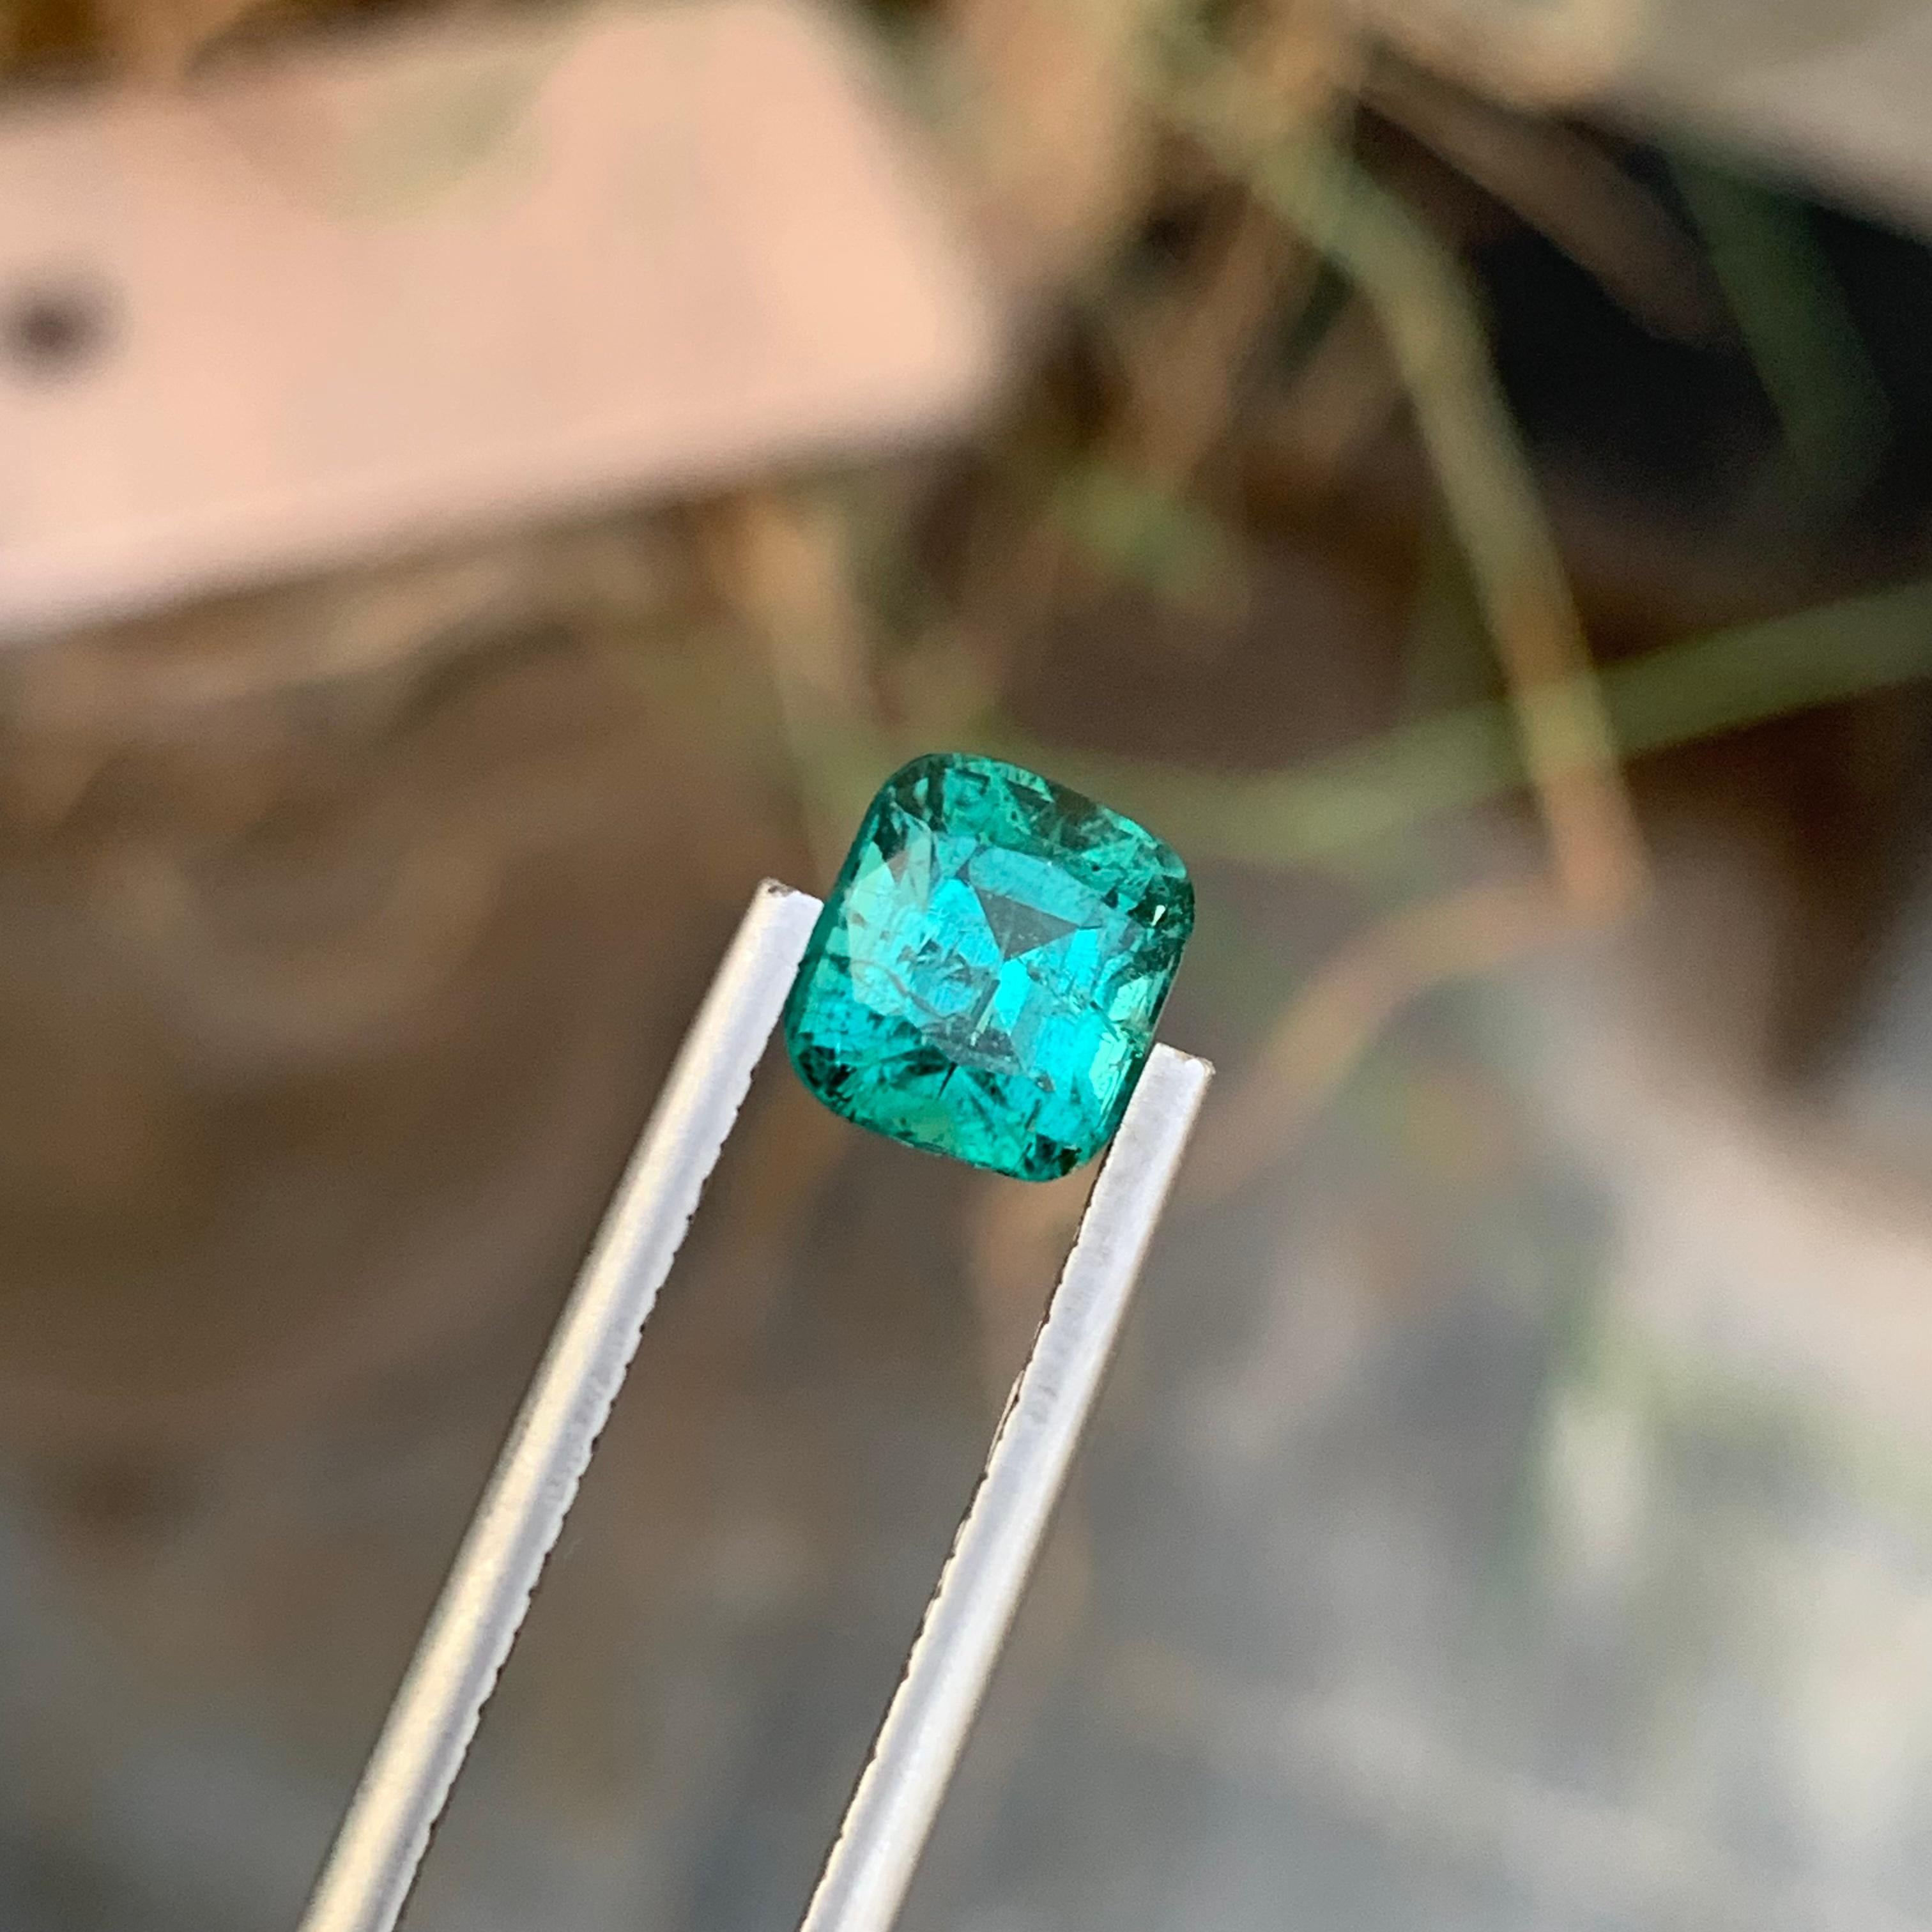 Cushion Cut 2.15 Carat Natural Loose Blueish Green Tourmaline Gemstone Afghan Mine